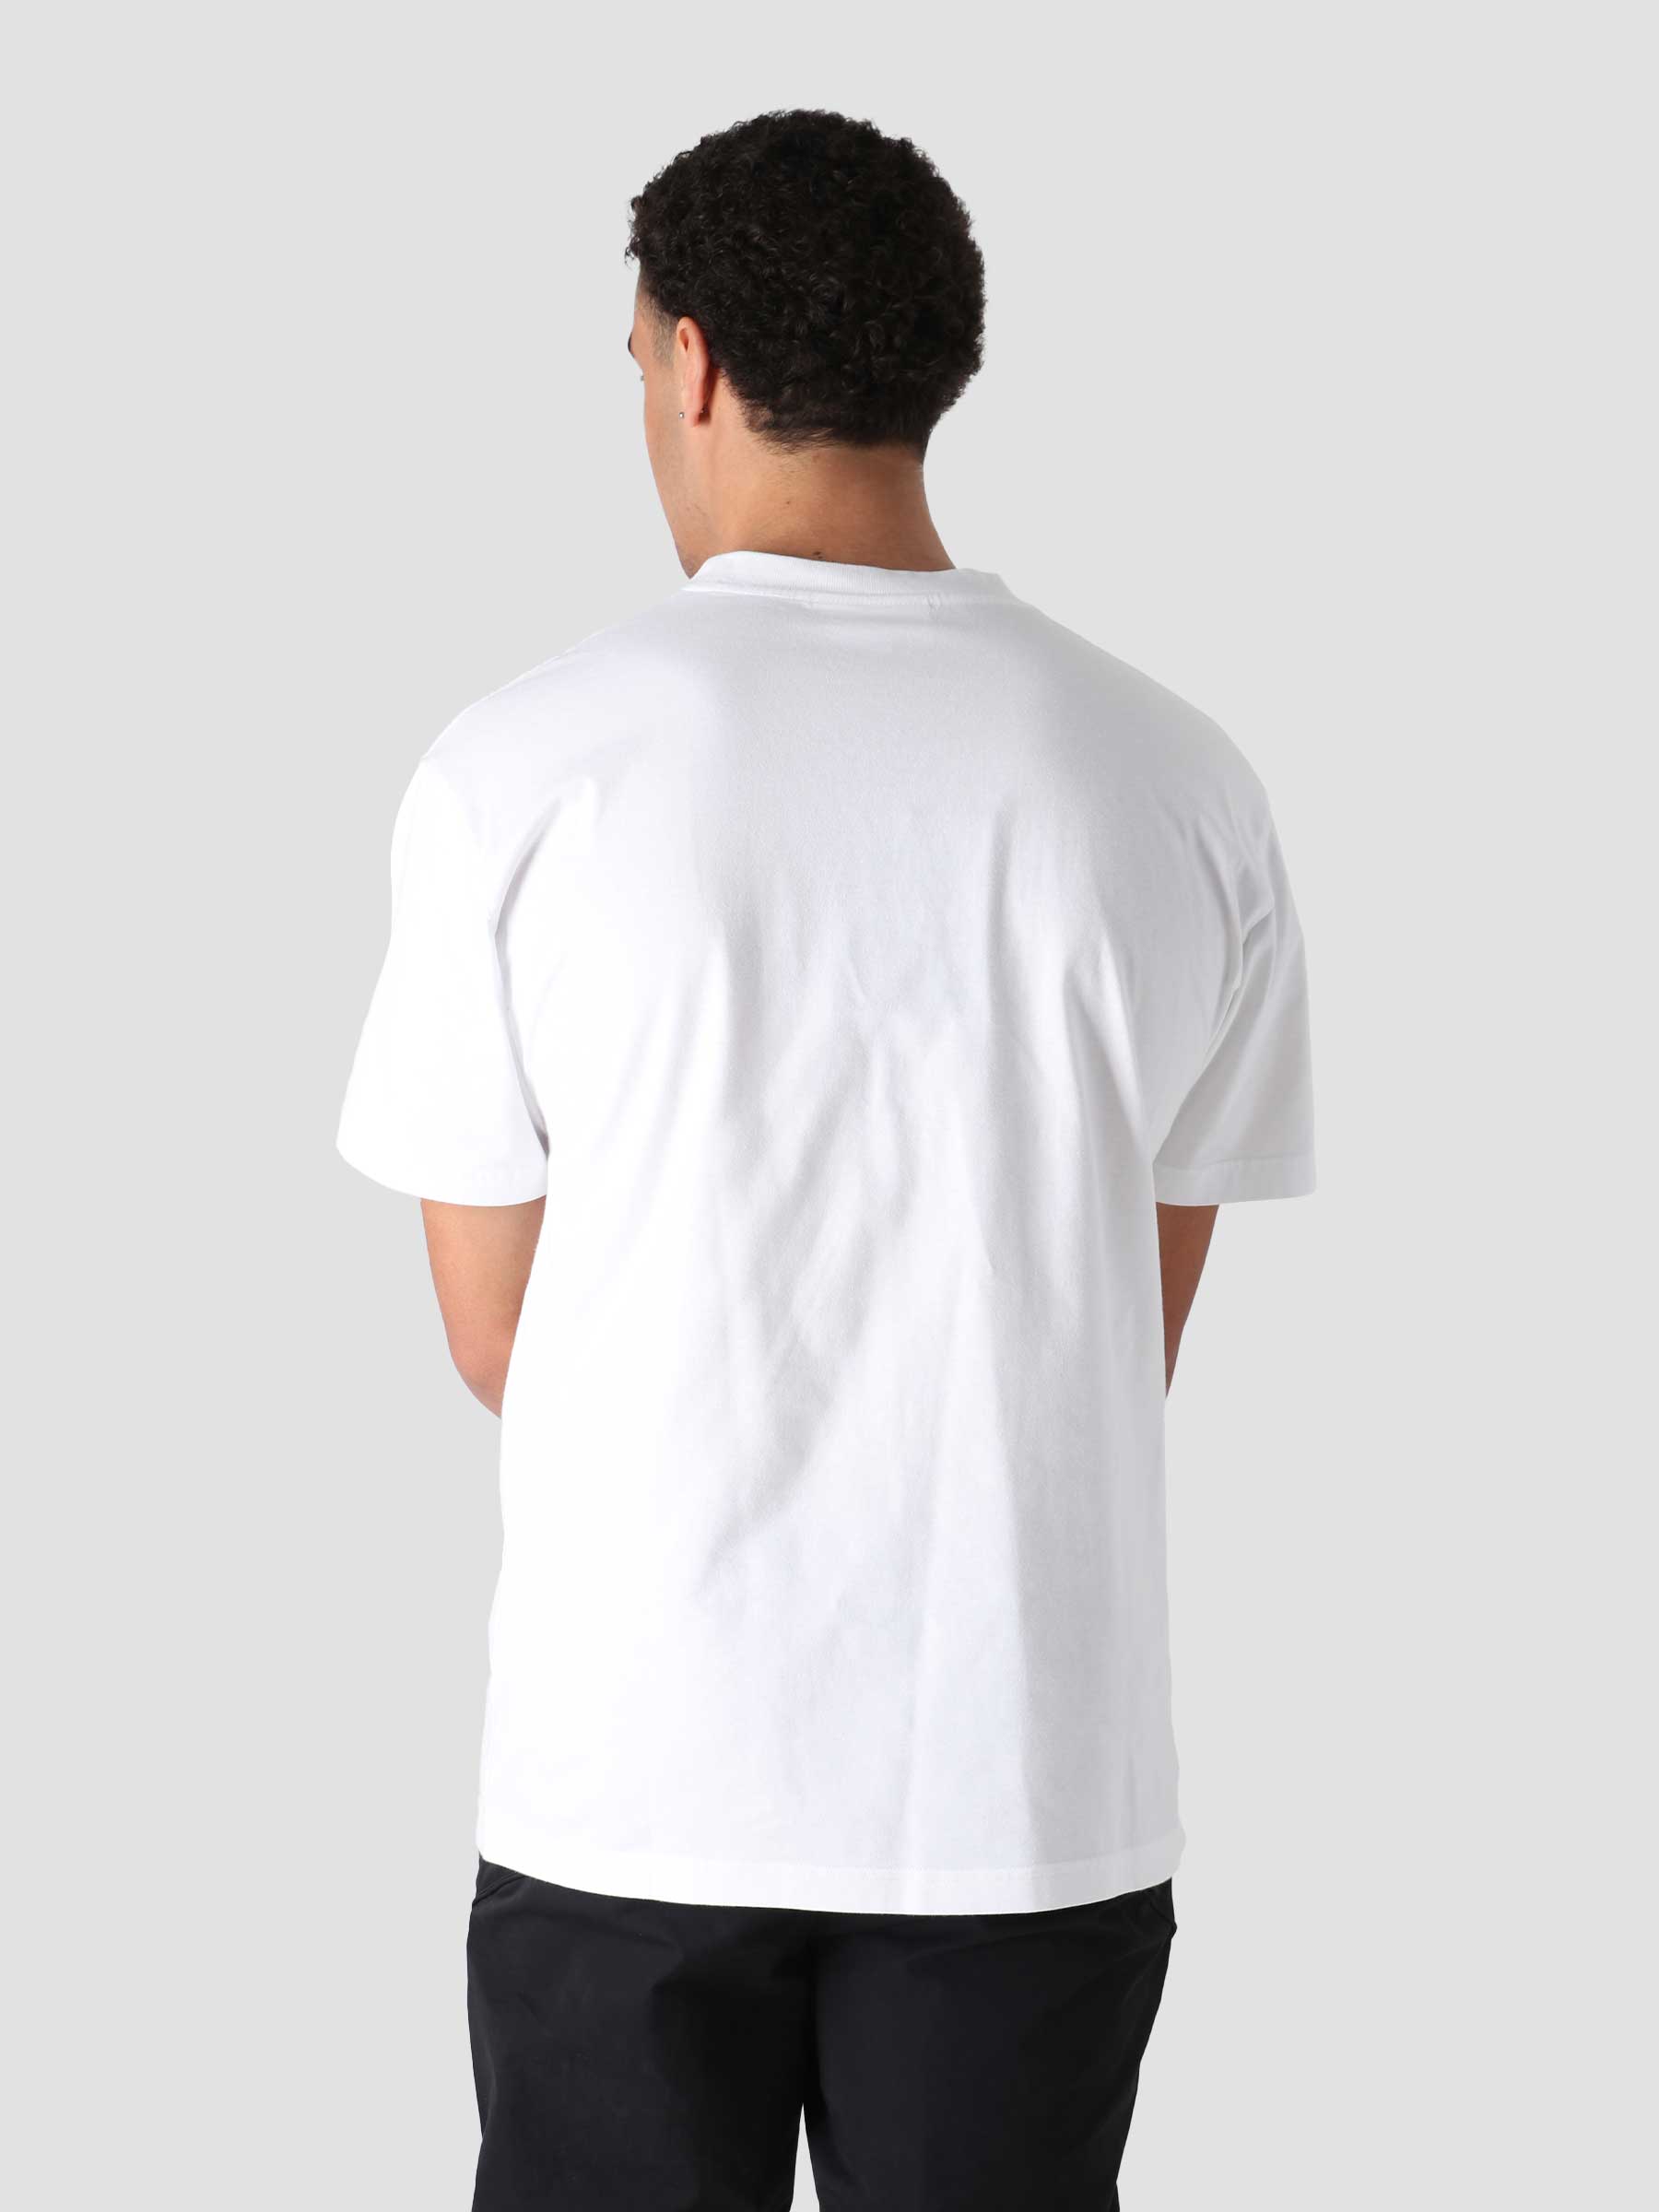 Olaf Block T-Shirt Optical White NOS_0021